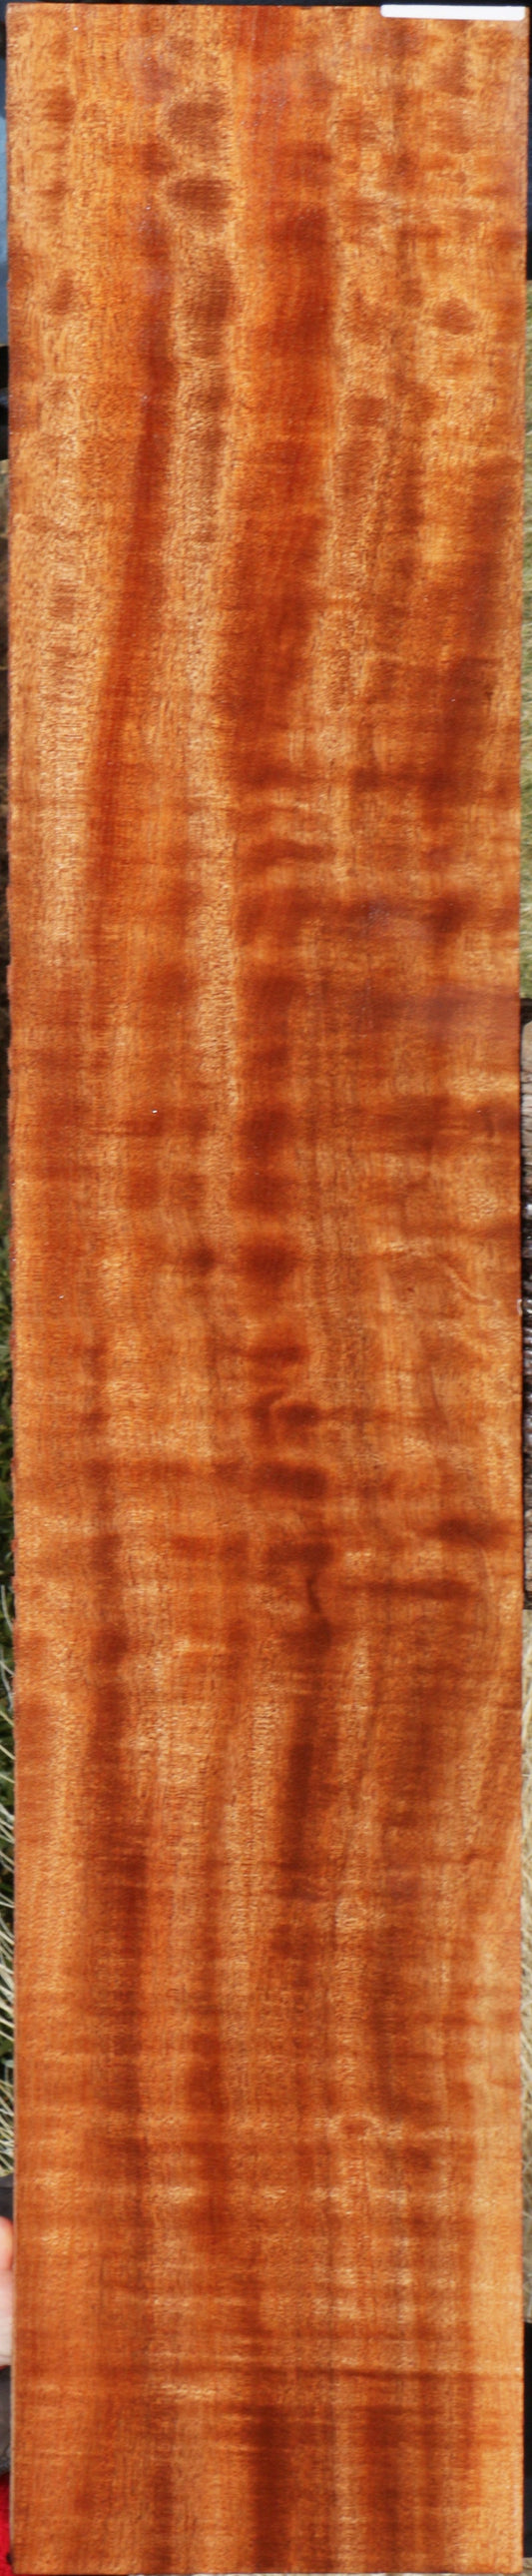 Exhibition Sipo Lumber